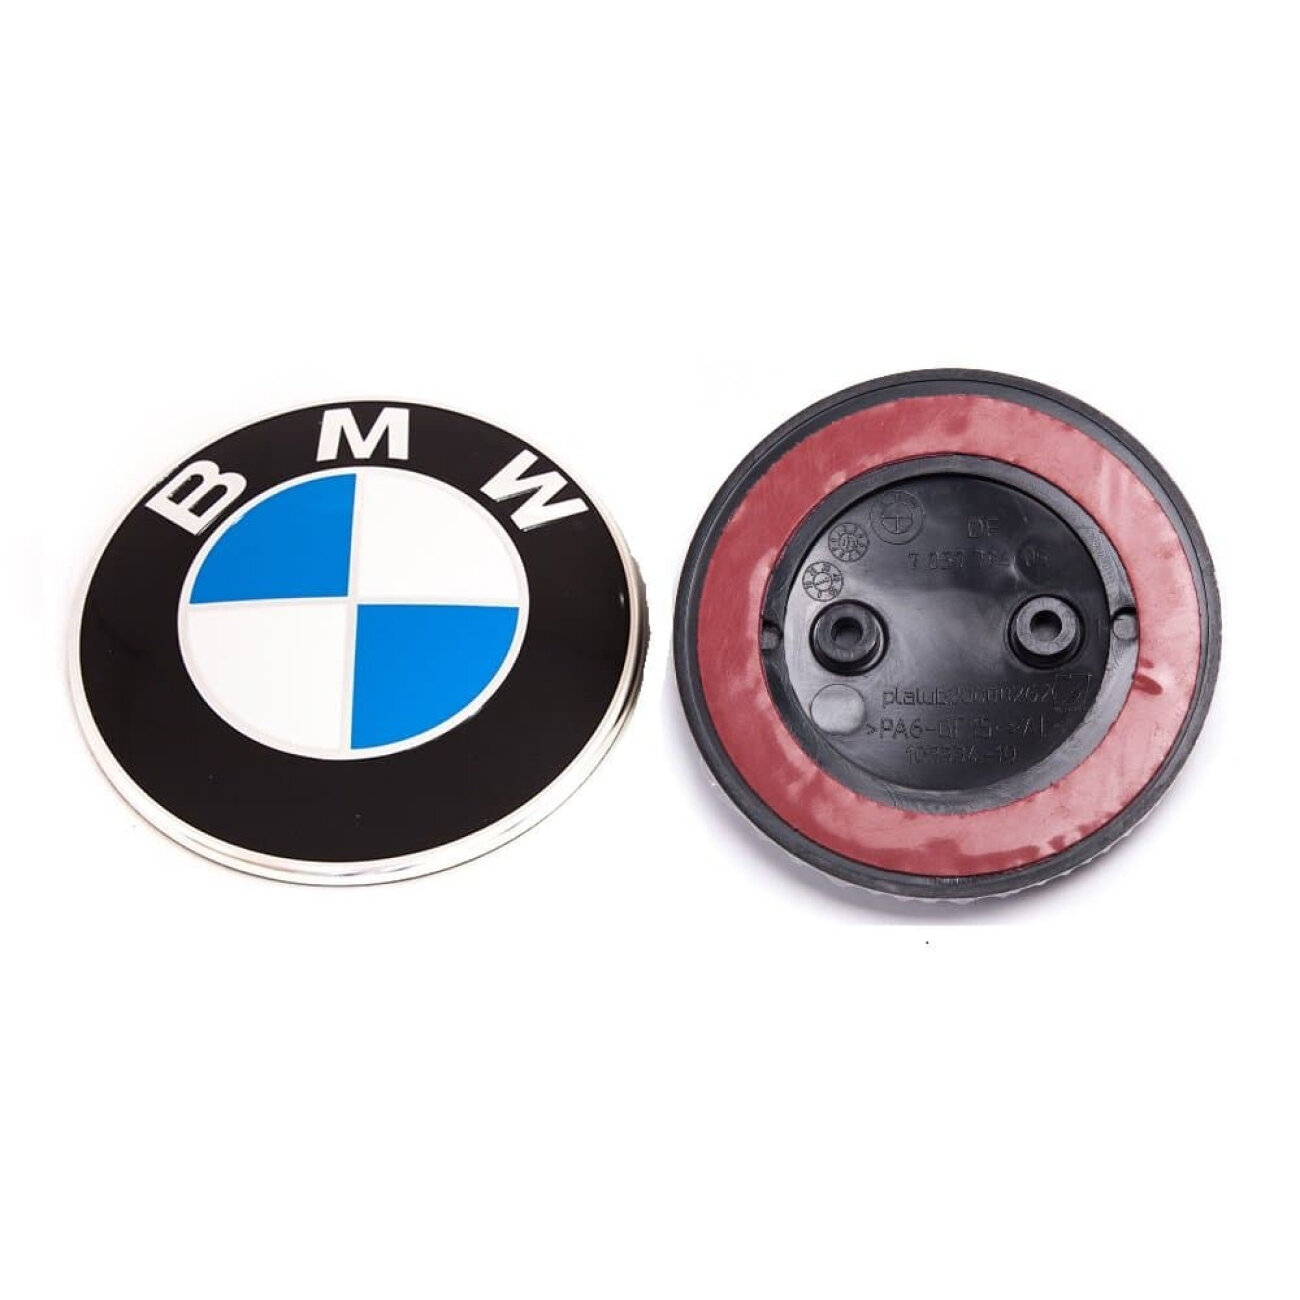 Эмблема BMW classic 82 мм